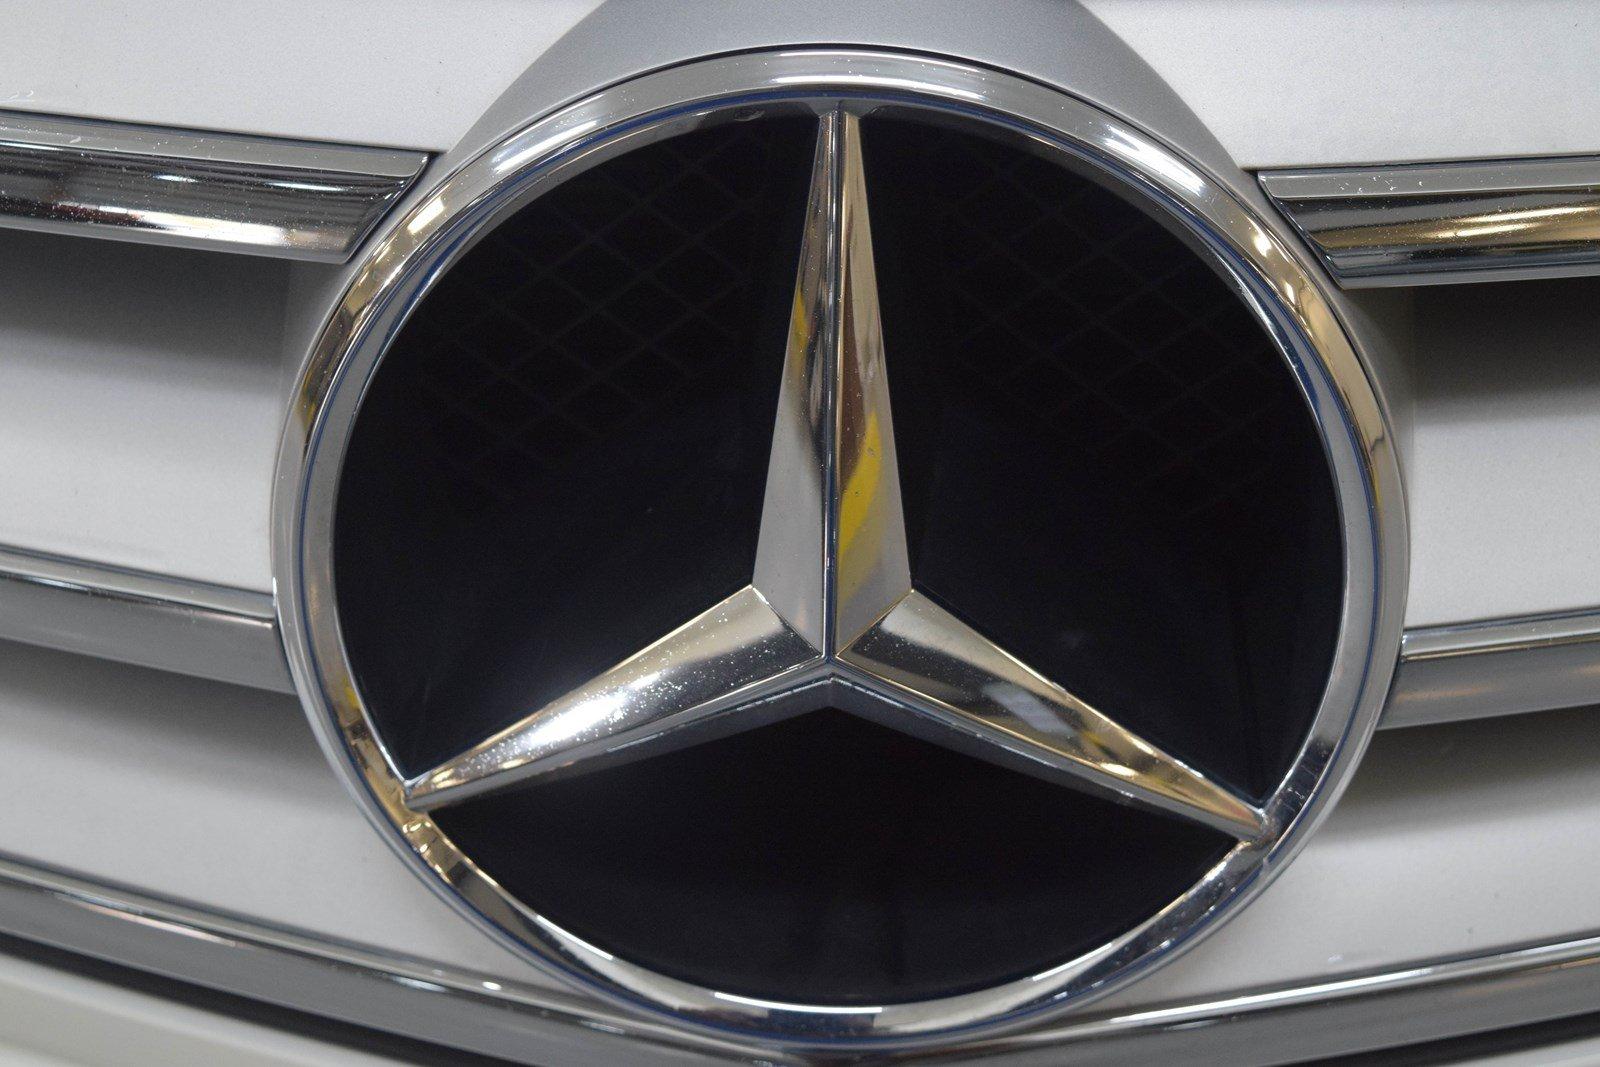 Used 2009 Mercedes-Benz C-Class 3.0L Luxury for sale Sold at Gravity Autos Marietta in Marietta GA 30060 9